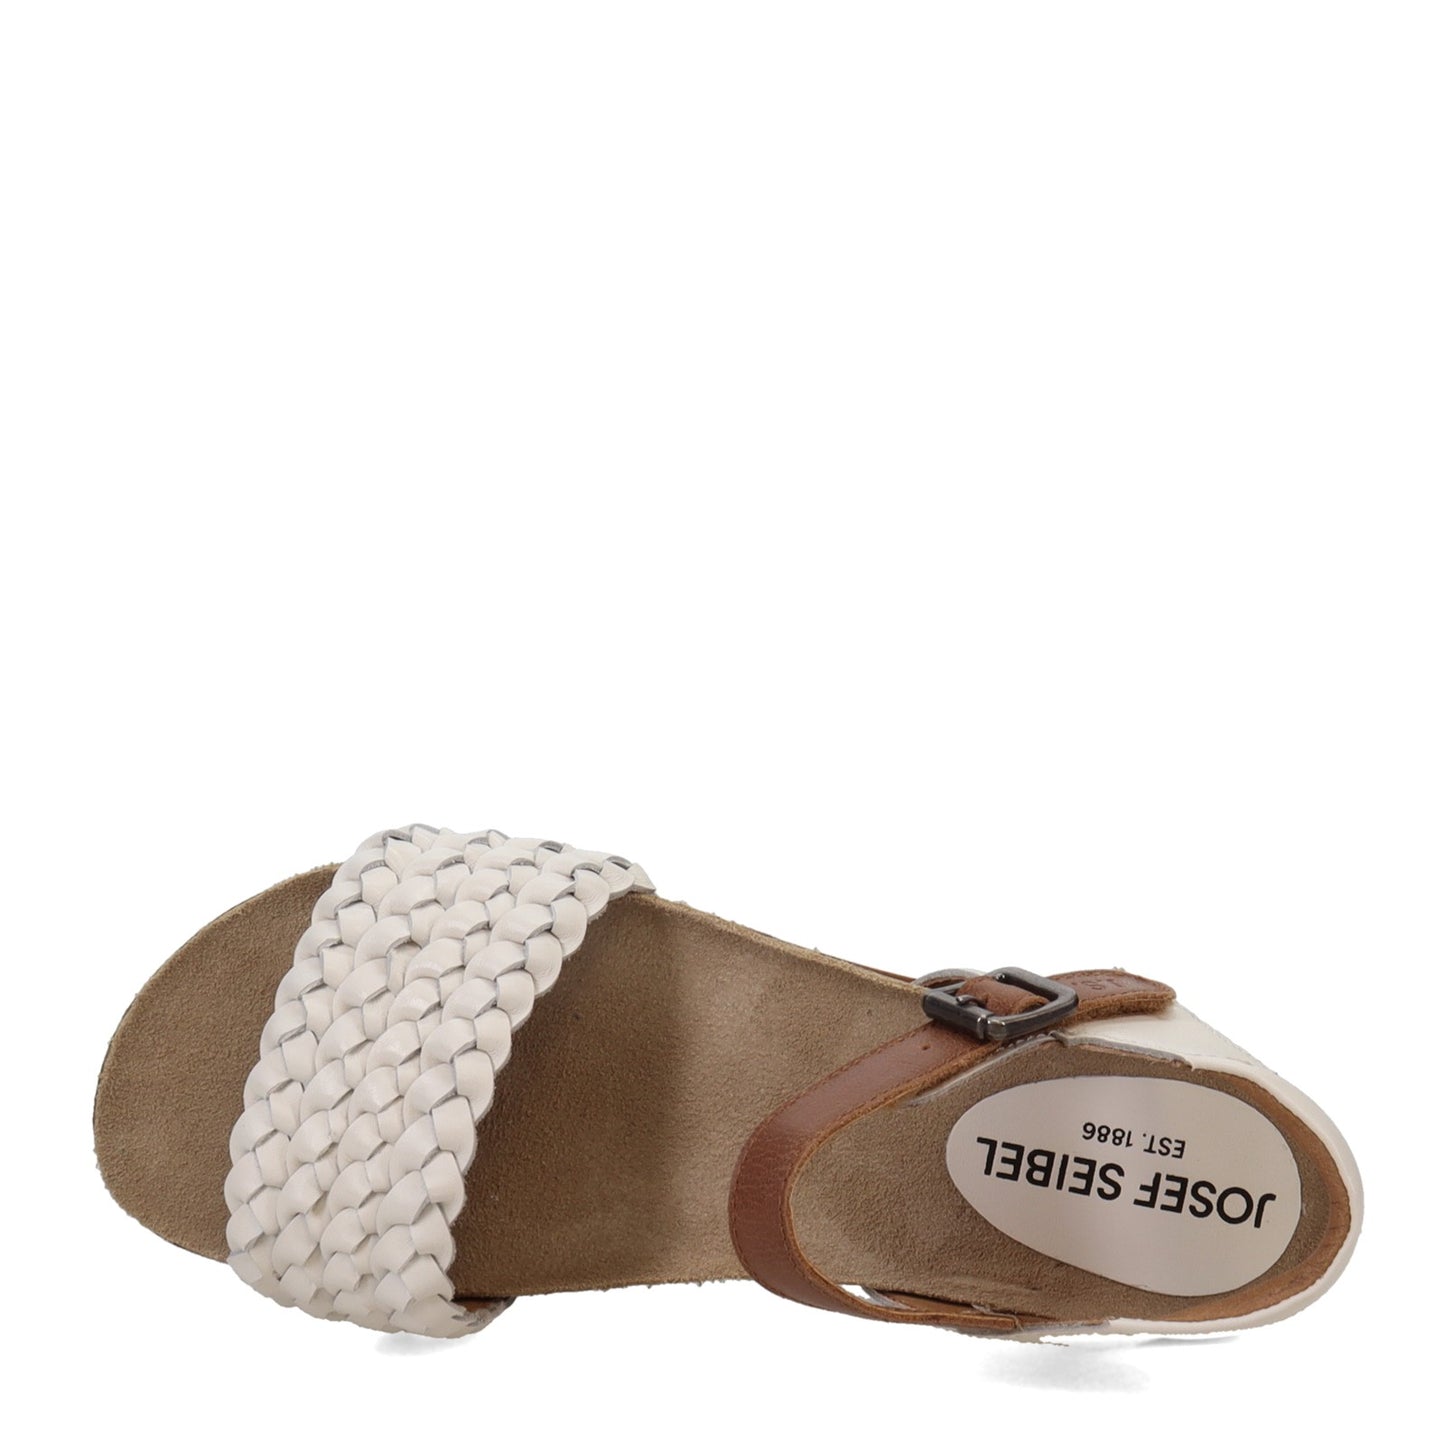 Peltz Shoes  Women's Josef Seibel Clea 16 Sandal WHITE KOMBI 72816-42001